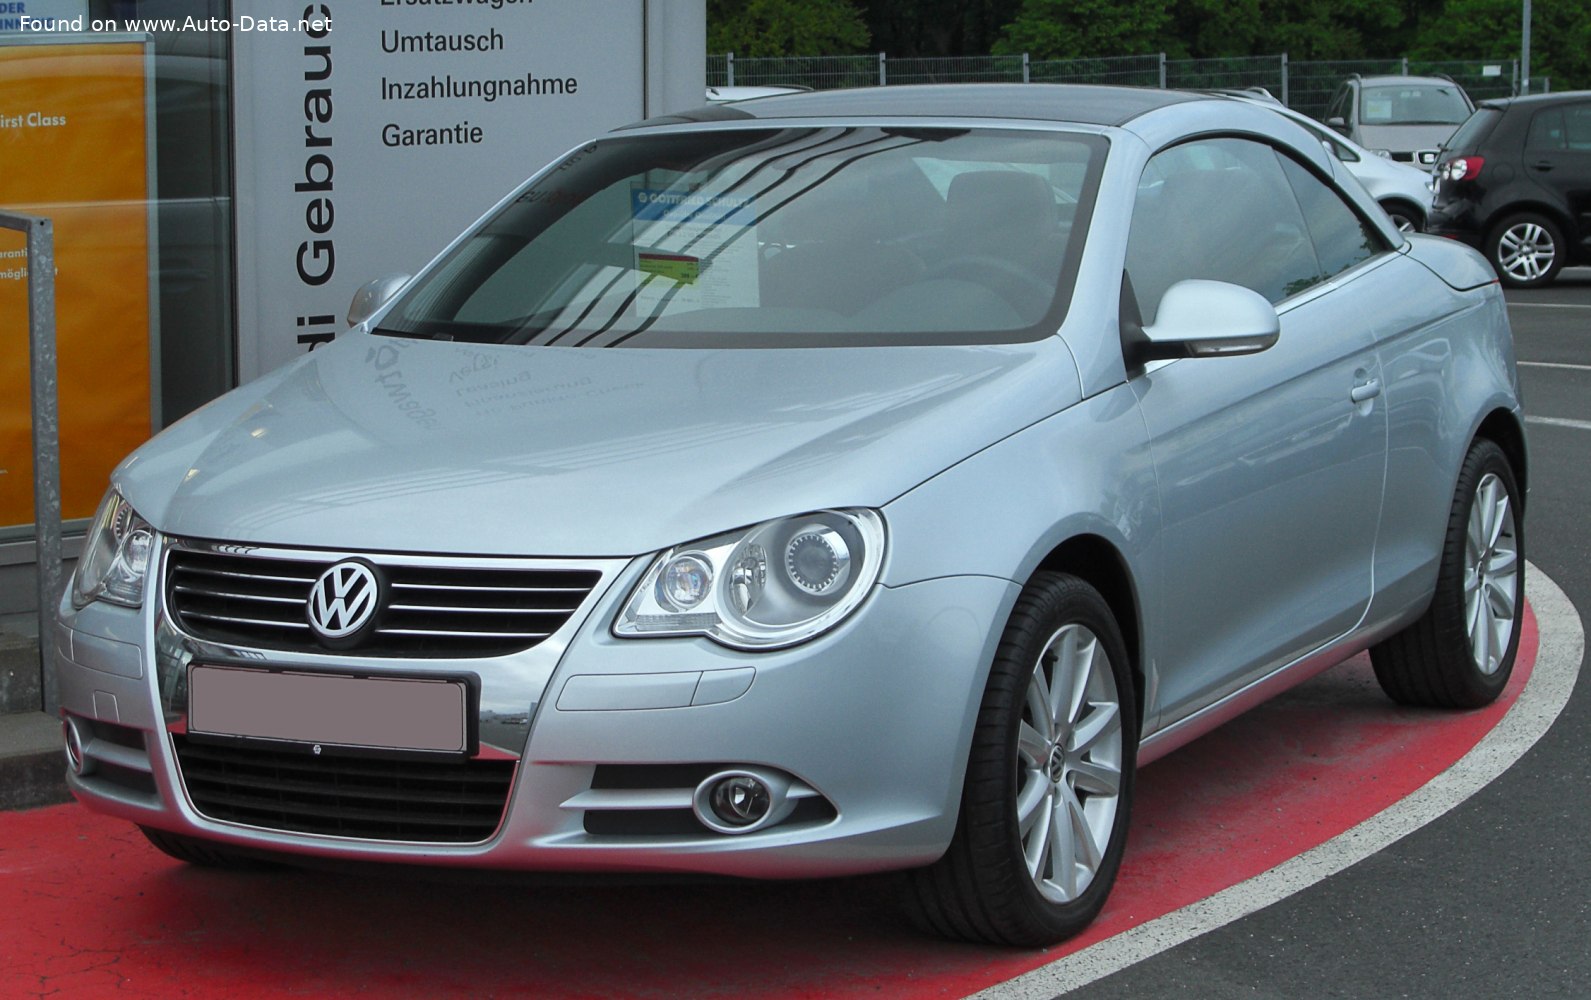 2008 Volkswagen Eos 2.0 TDI (140 Hp) DSG  Technical specs, data, fuel  consumption, Dimensions